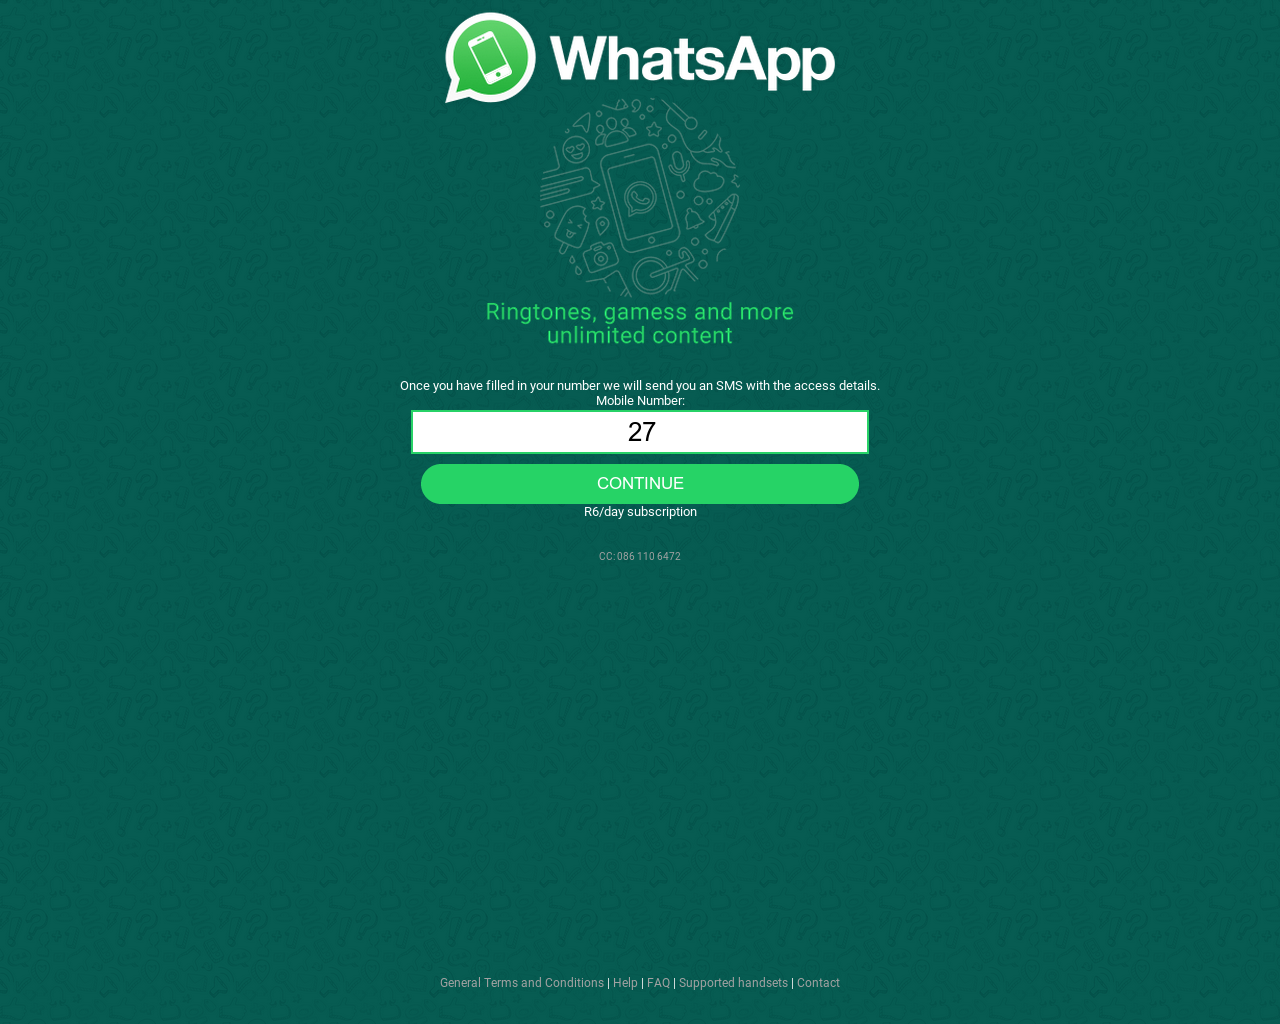  Get WhatsApp Content